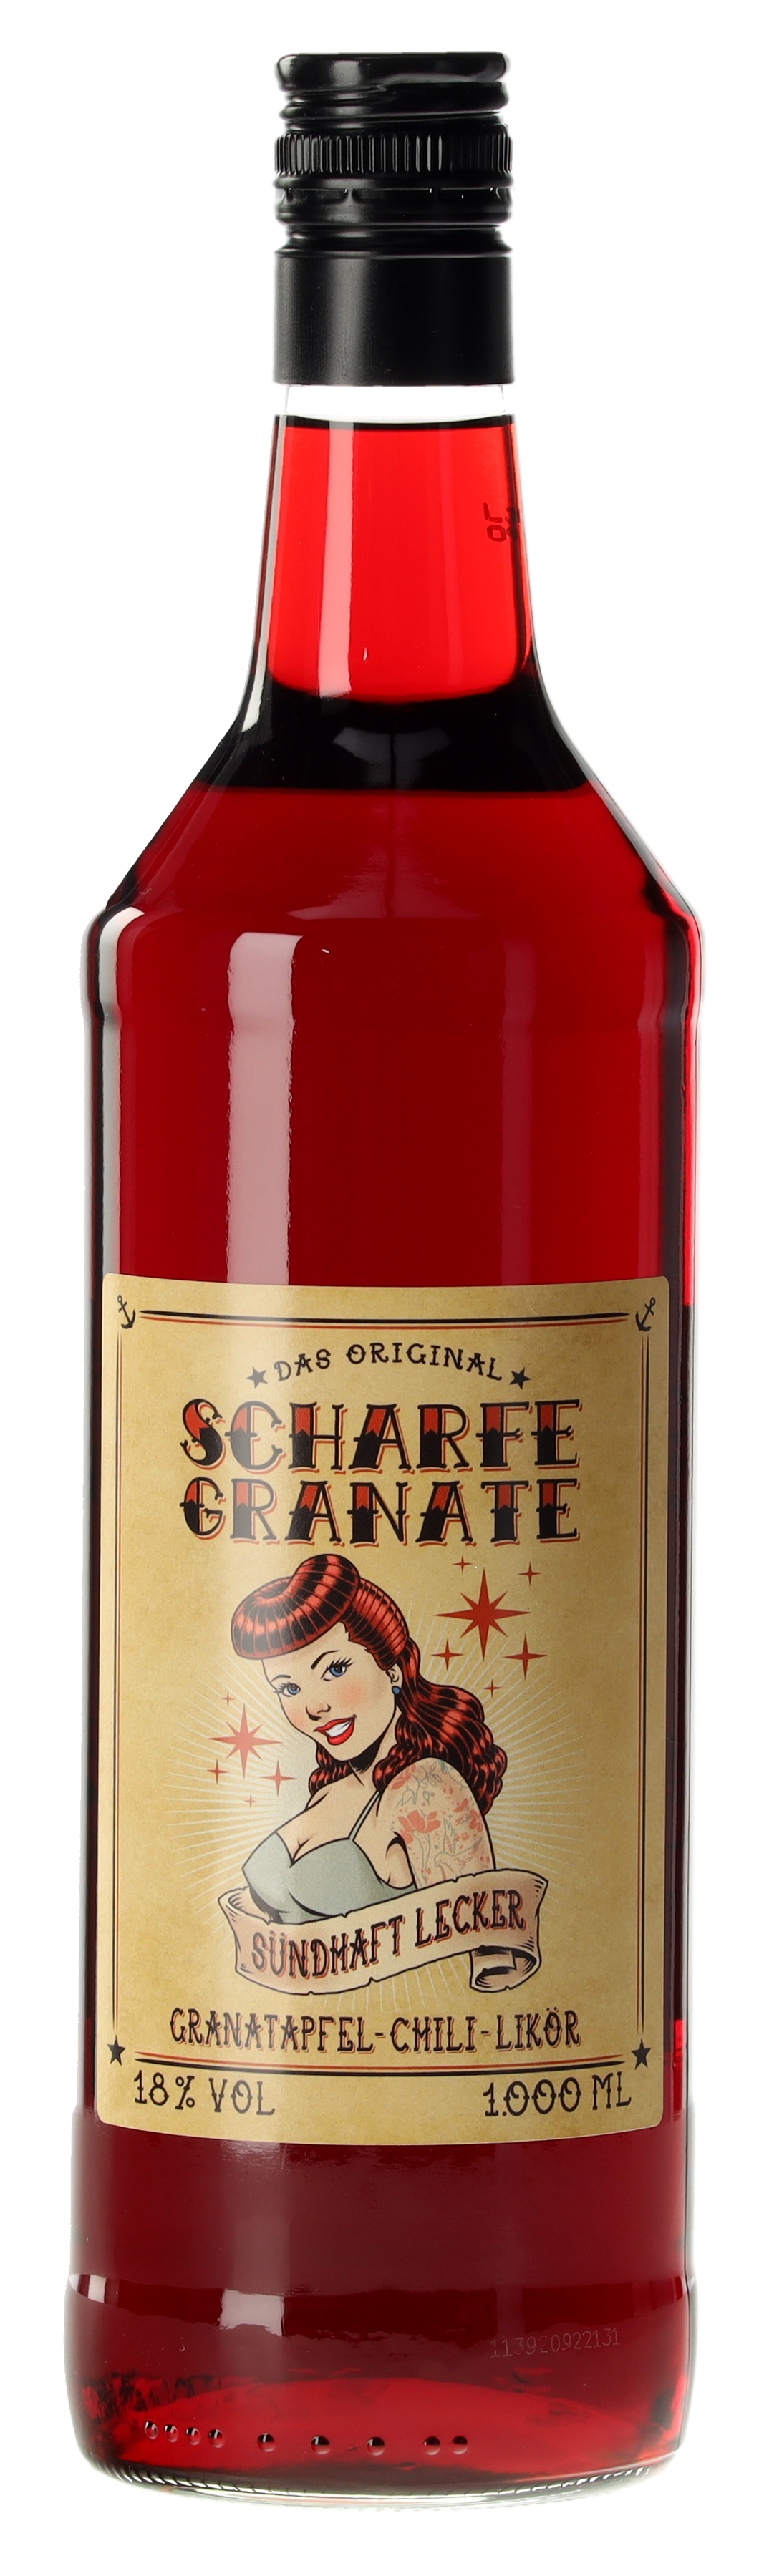 Granatapfel-Chili-Likör